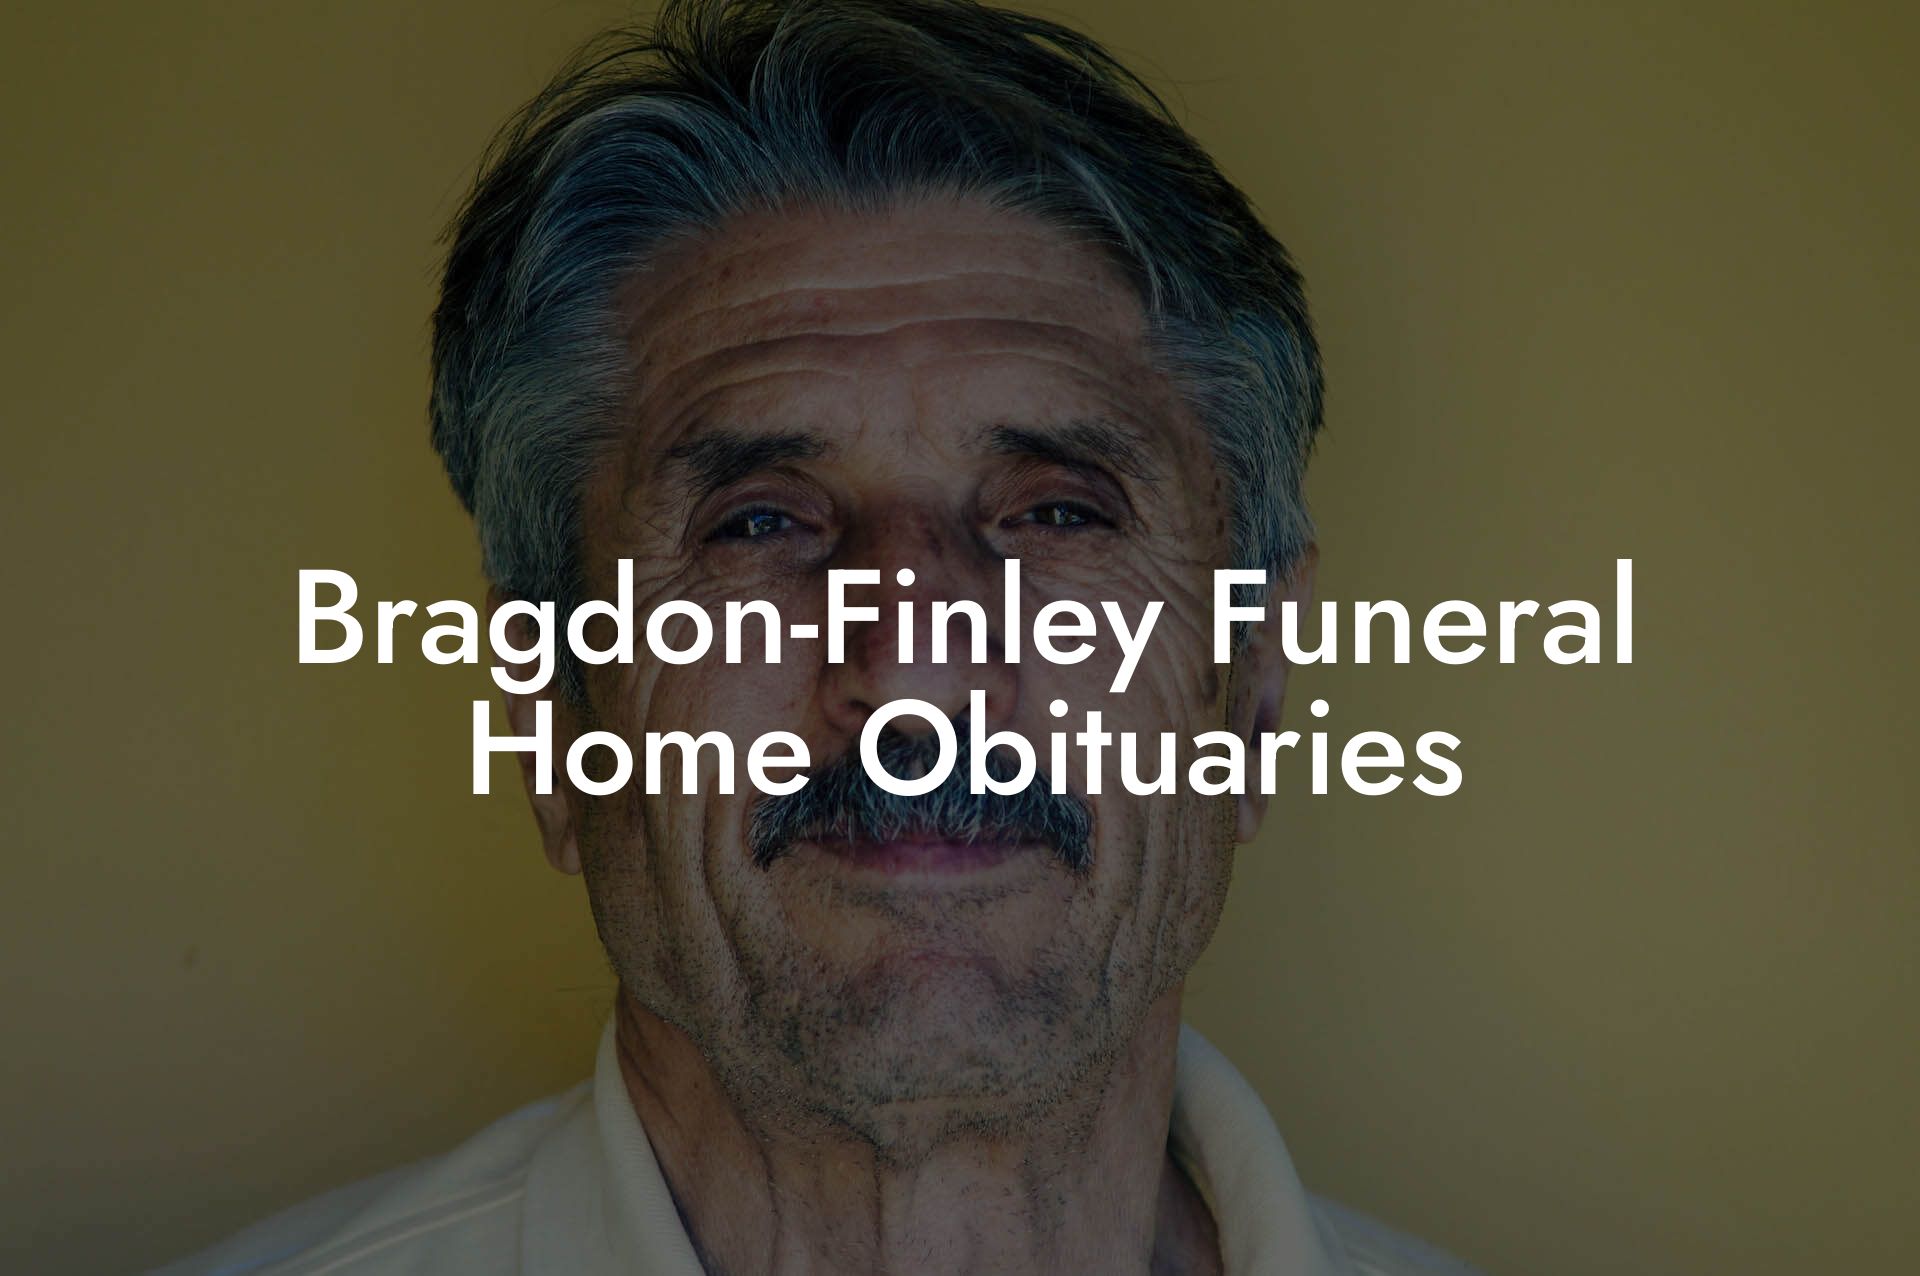 Bragdon-Finley Funeral Home Obituaries